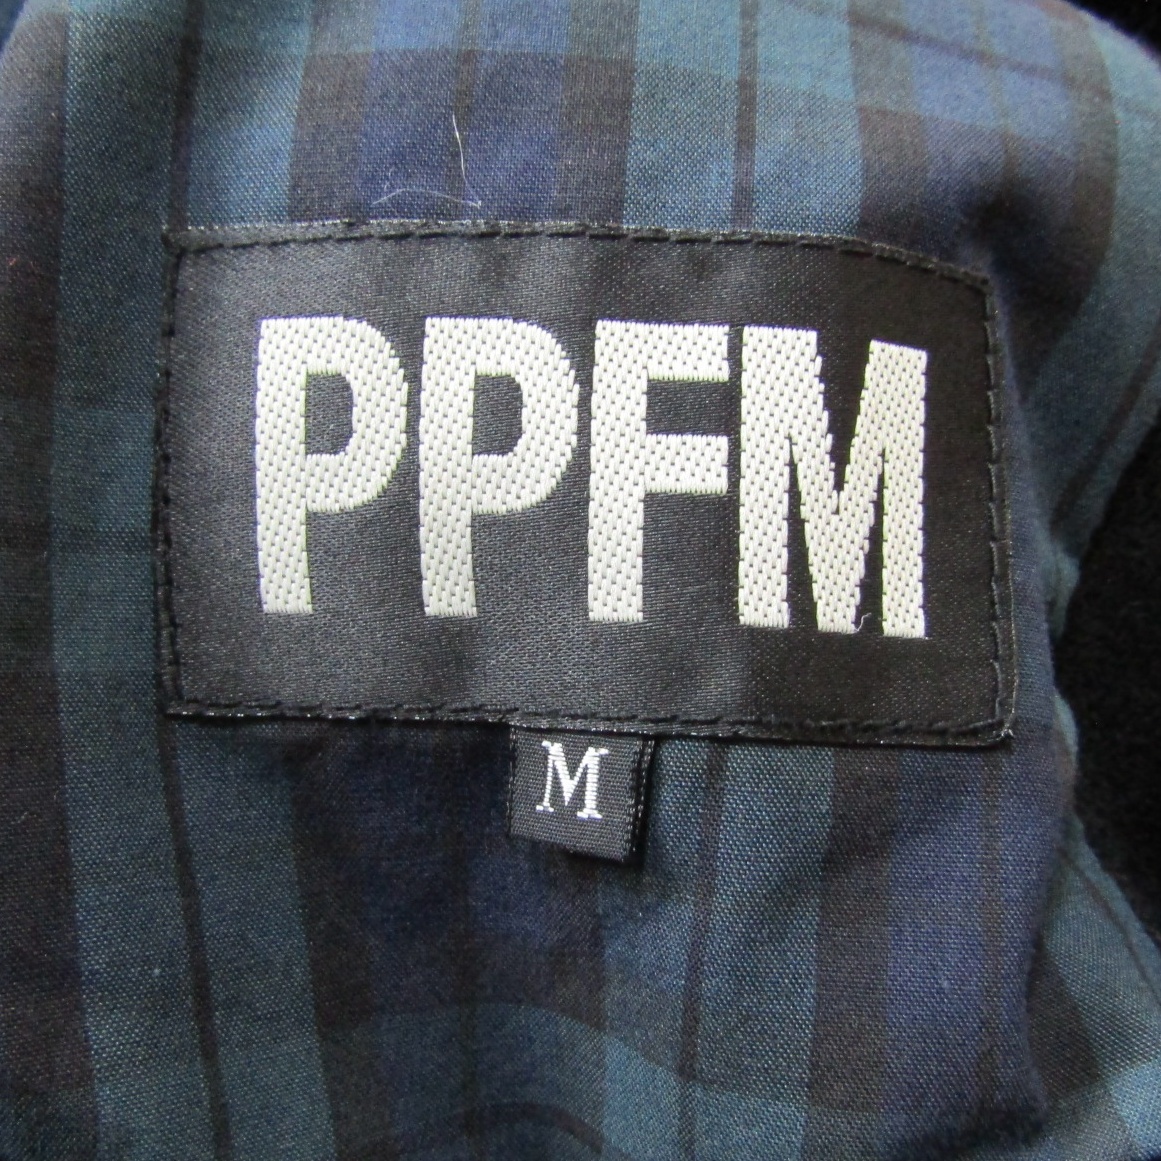 PPFM ペイトンプレイスフォーメン ピーコート Mサイズ - ジャケット